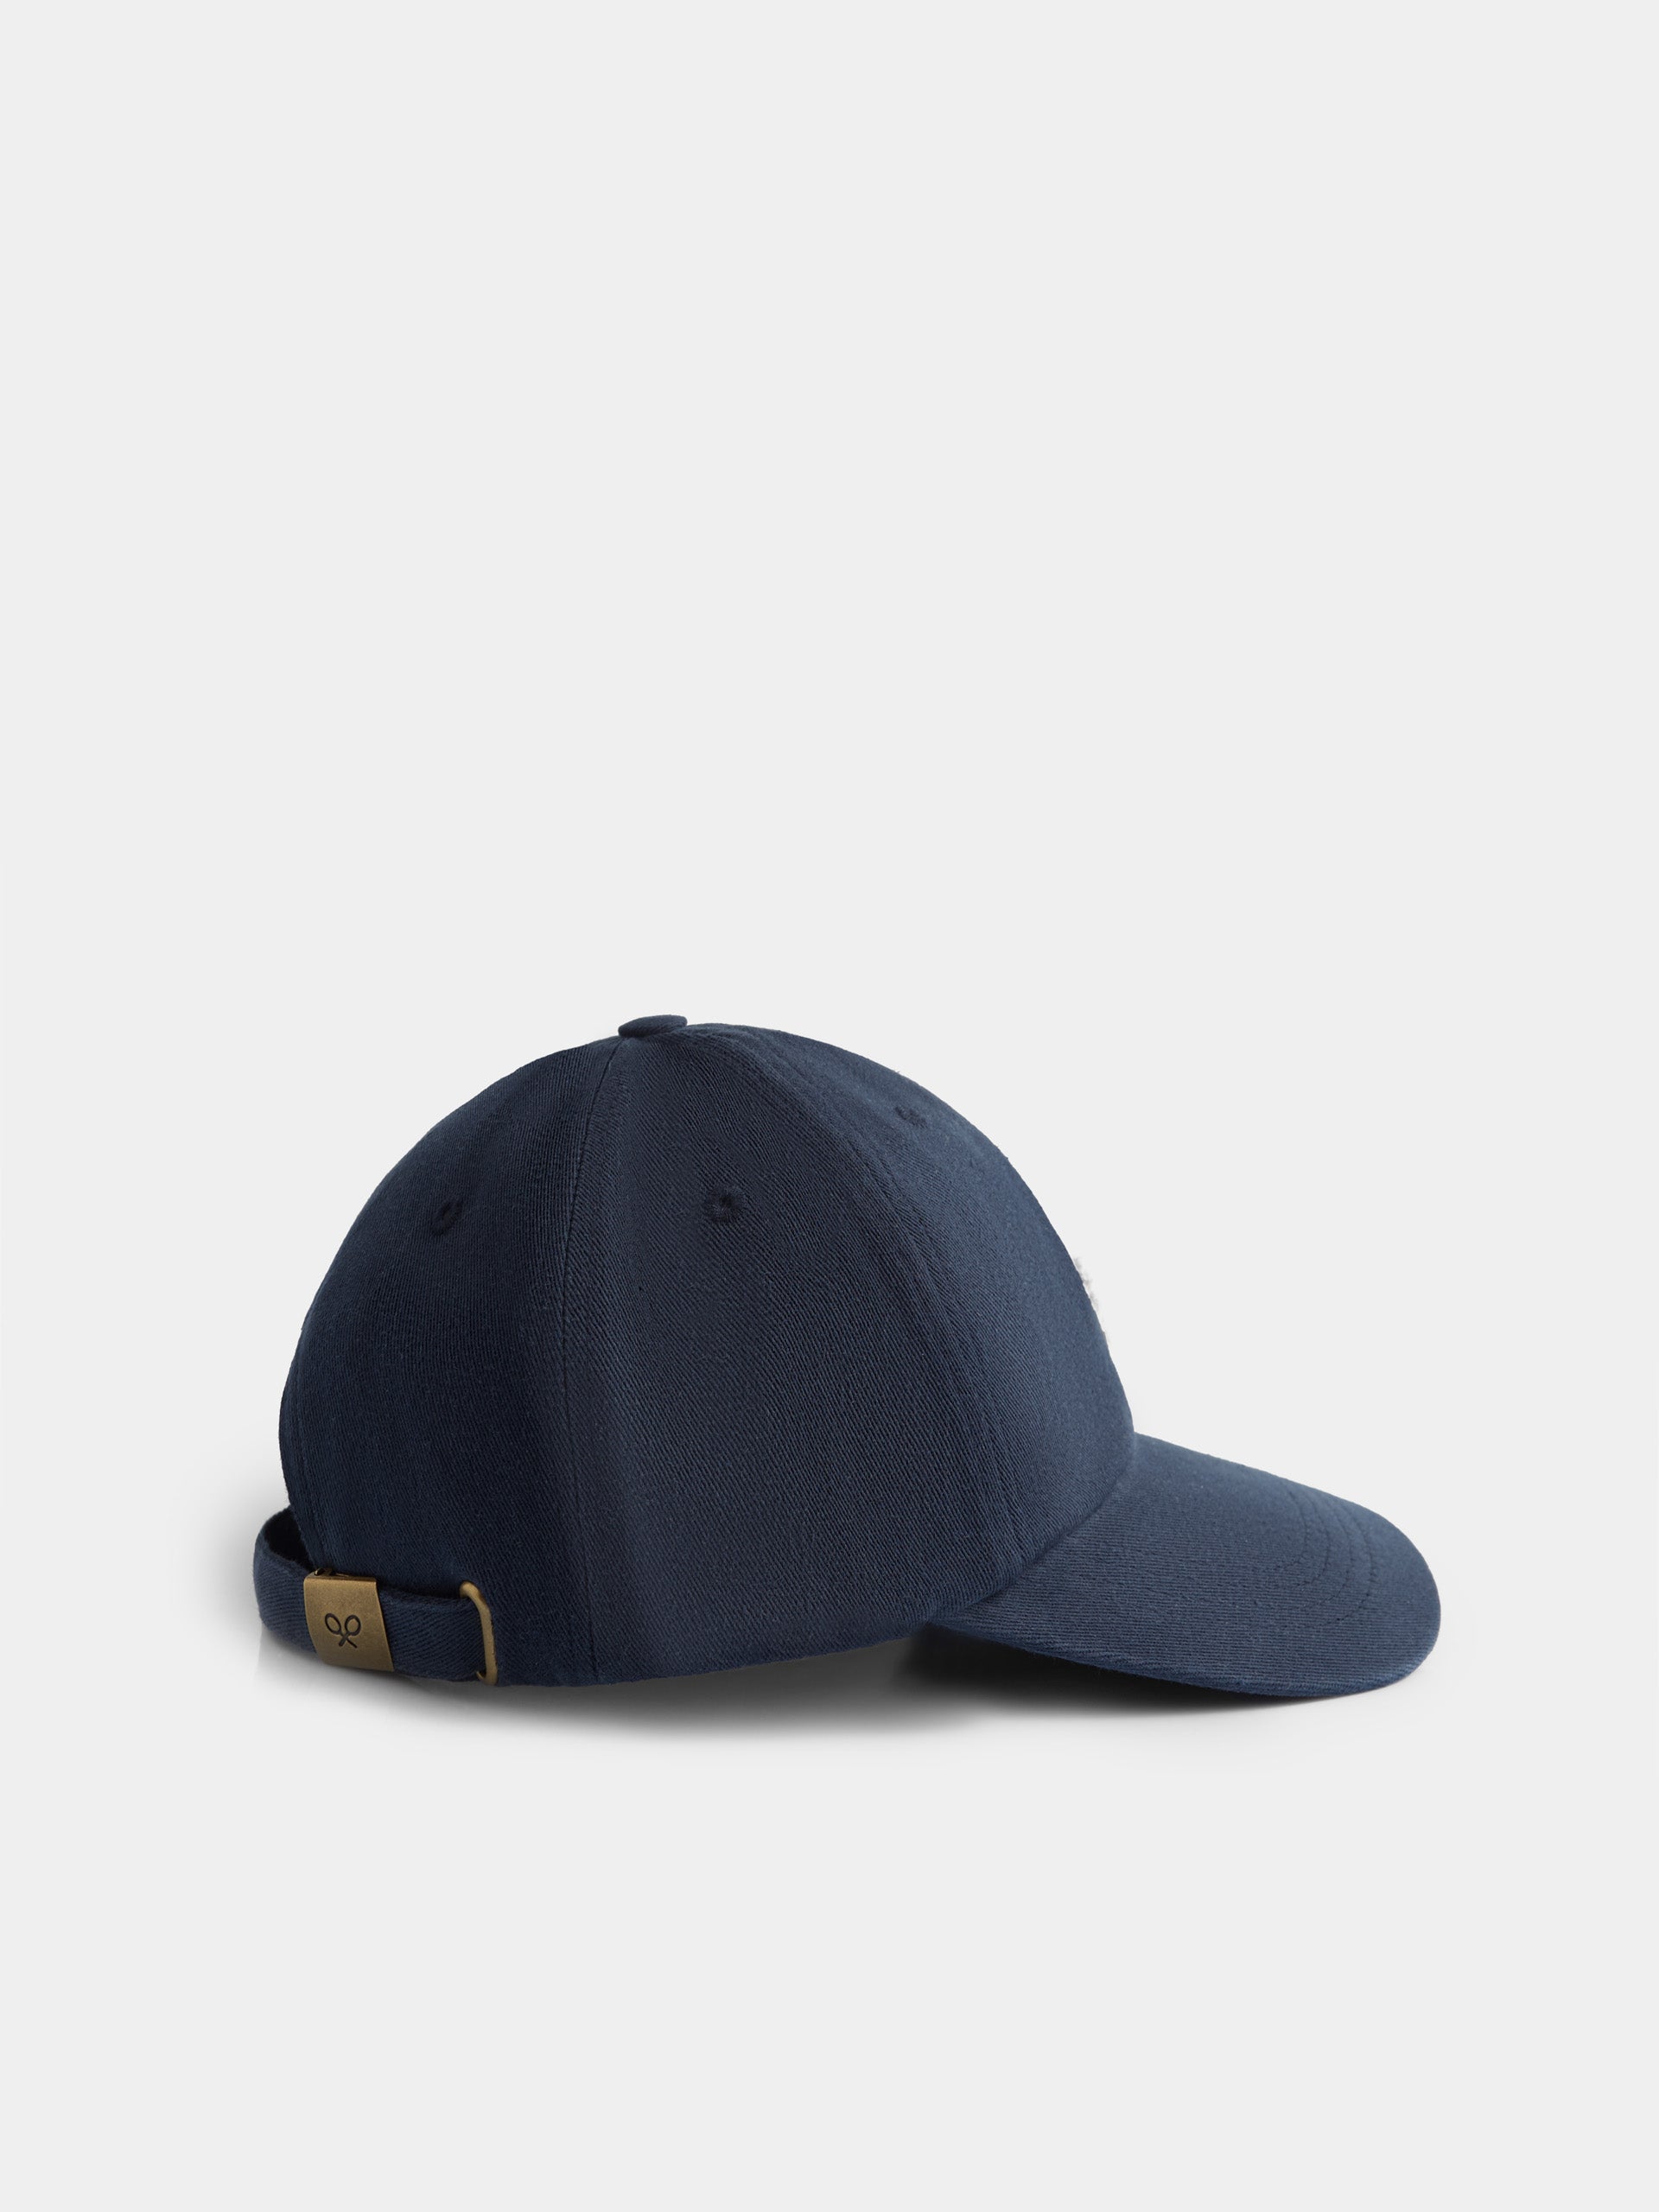 Navy blue embroidered racquet cap